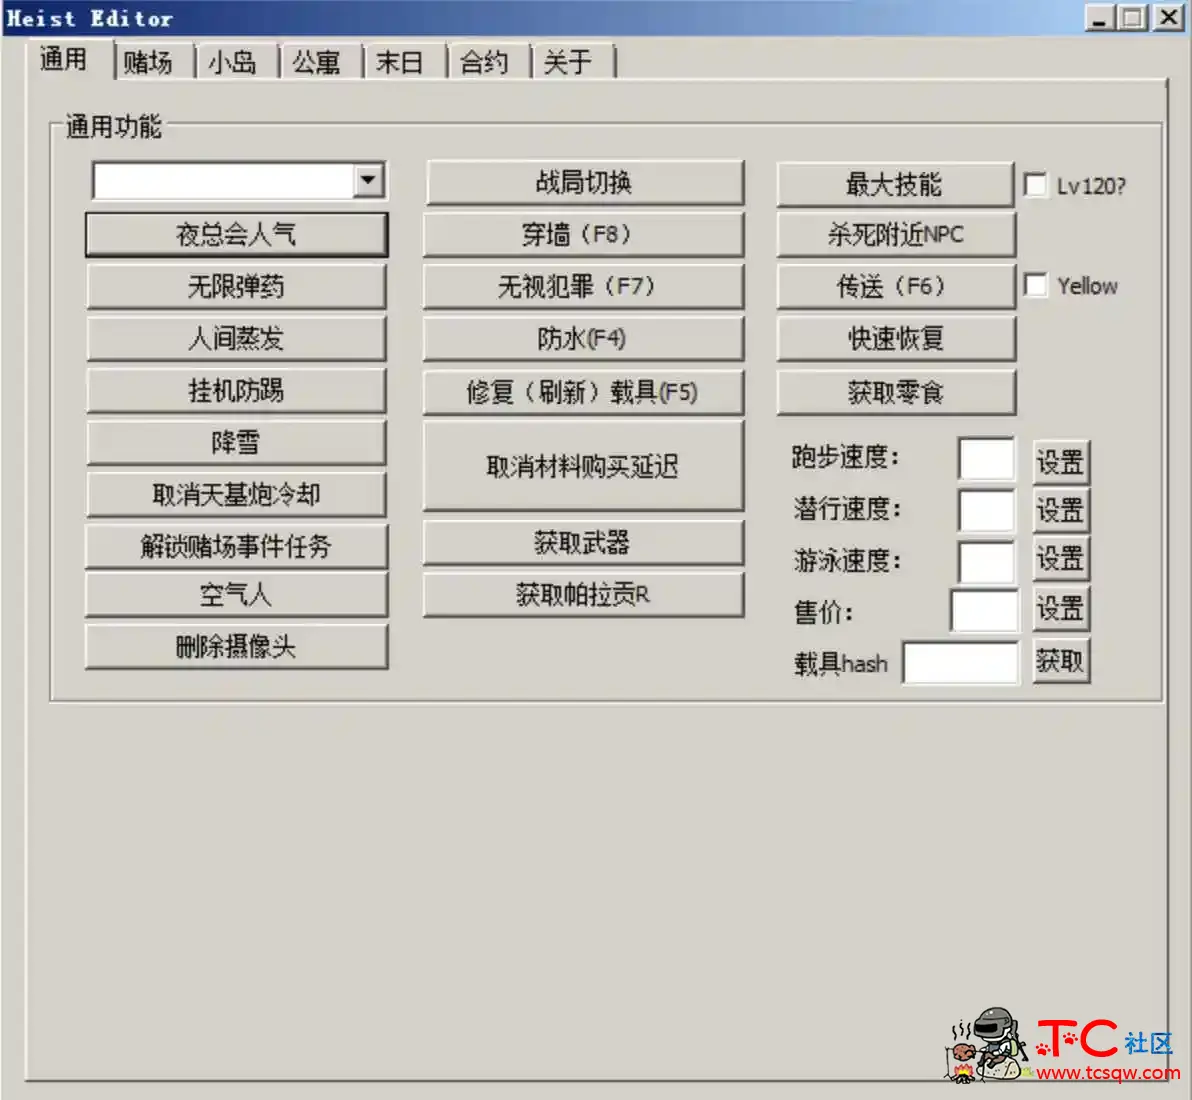 GTA5 Heist Editor外部抢劫编辑器 v3.5.7 屠城辅助网www.tcfz1.com9927